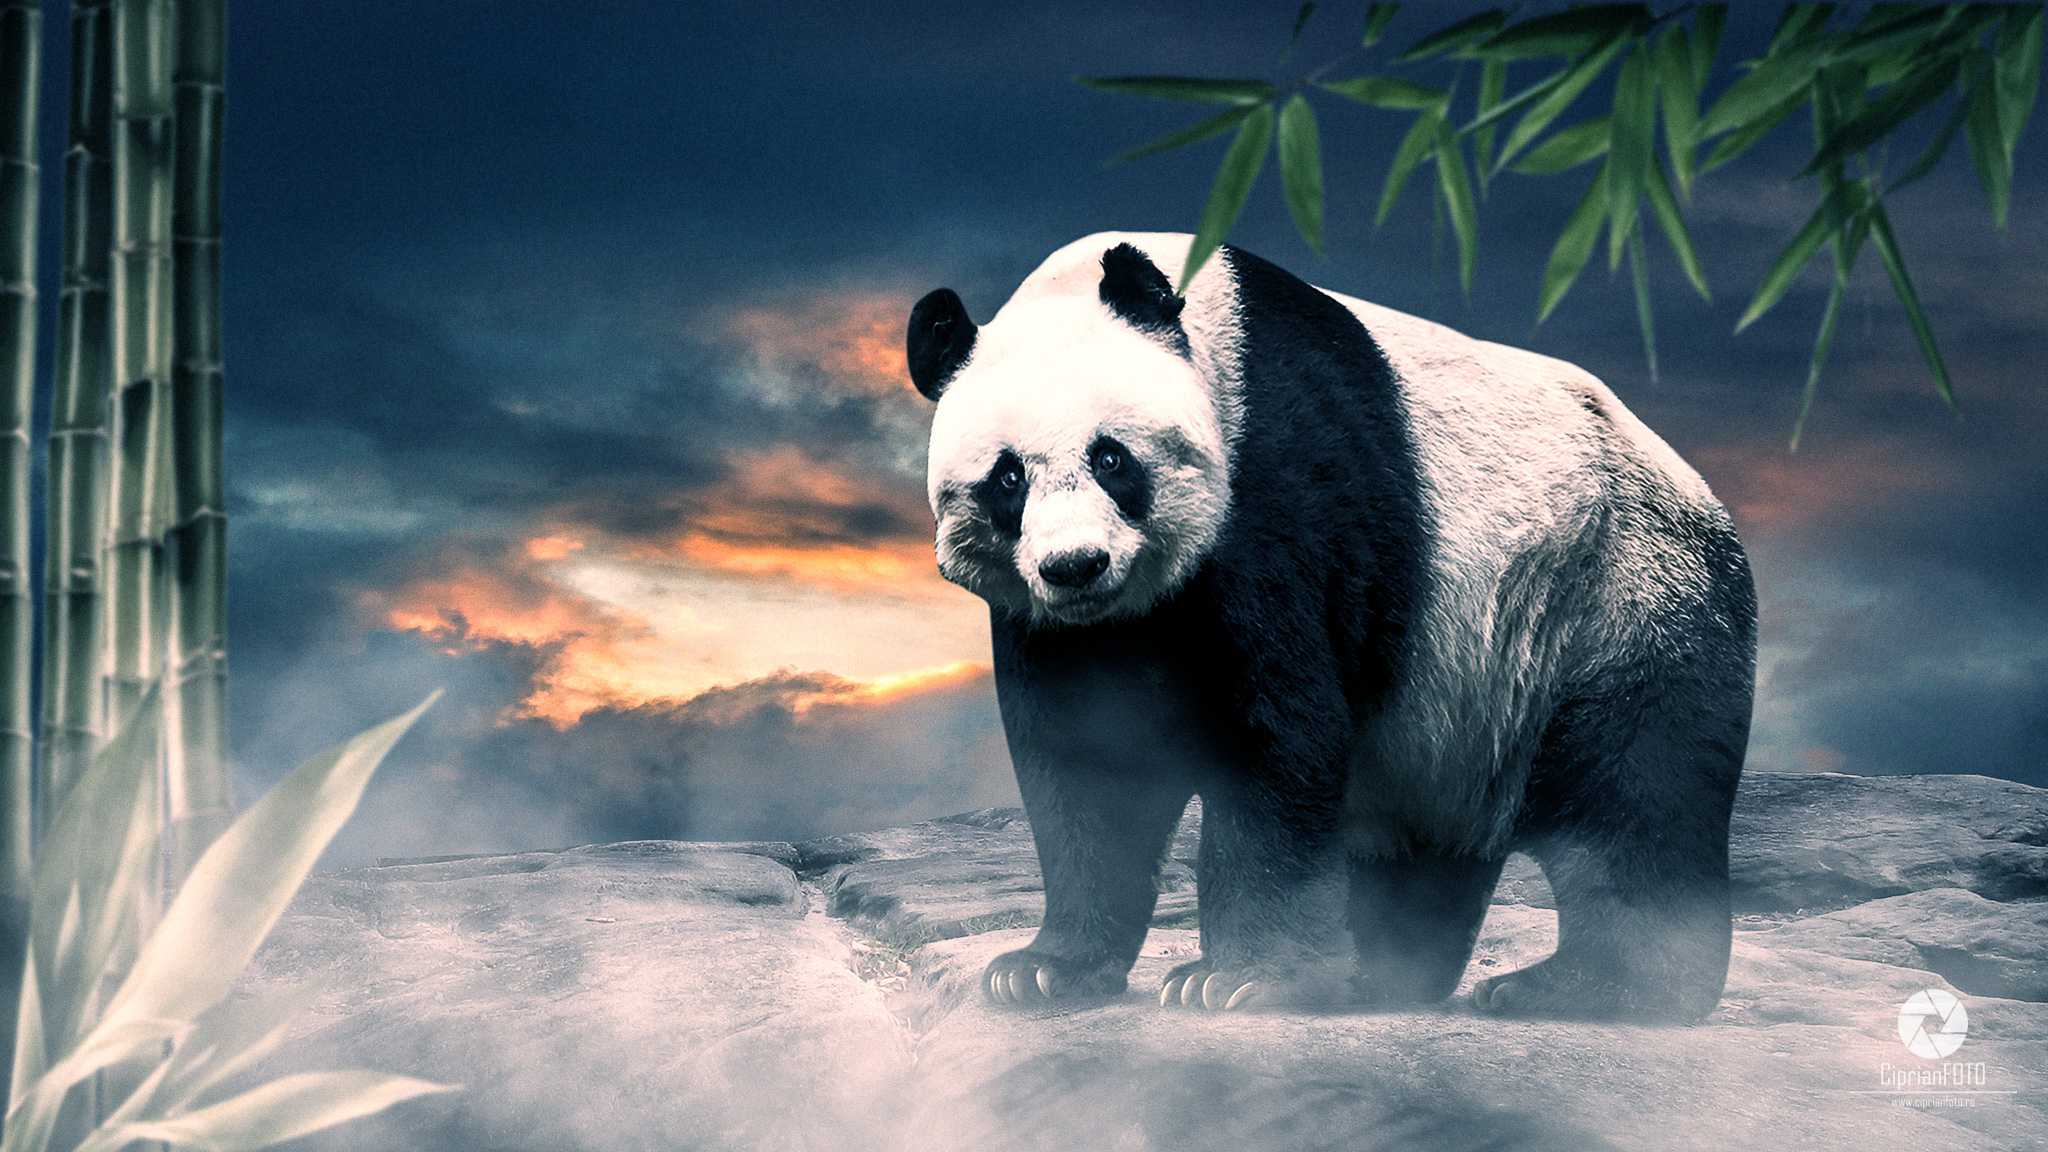 Panda Bear, Photoshop Manipulation Tutorial, CiprianFOTO